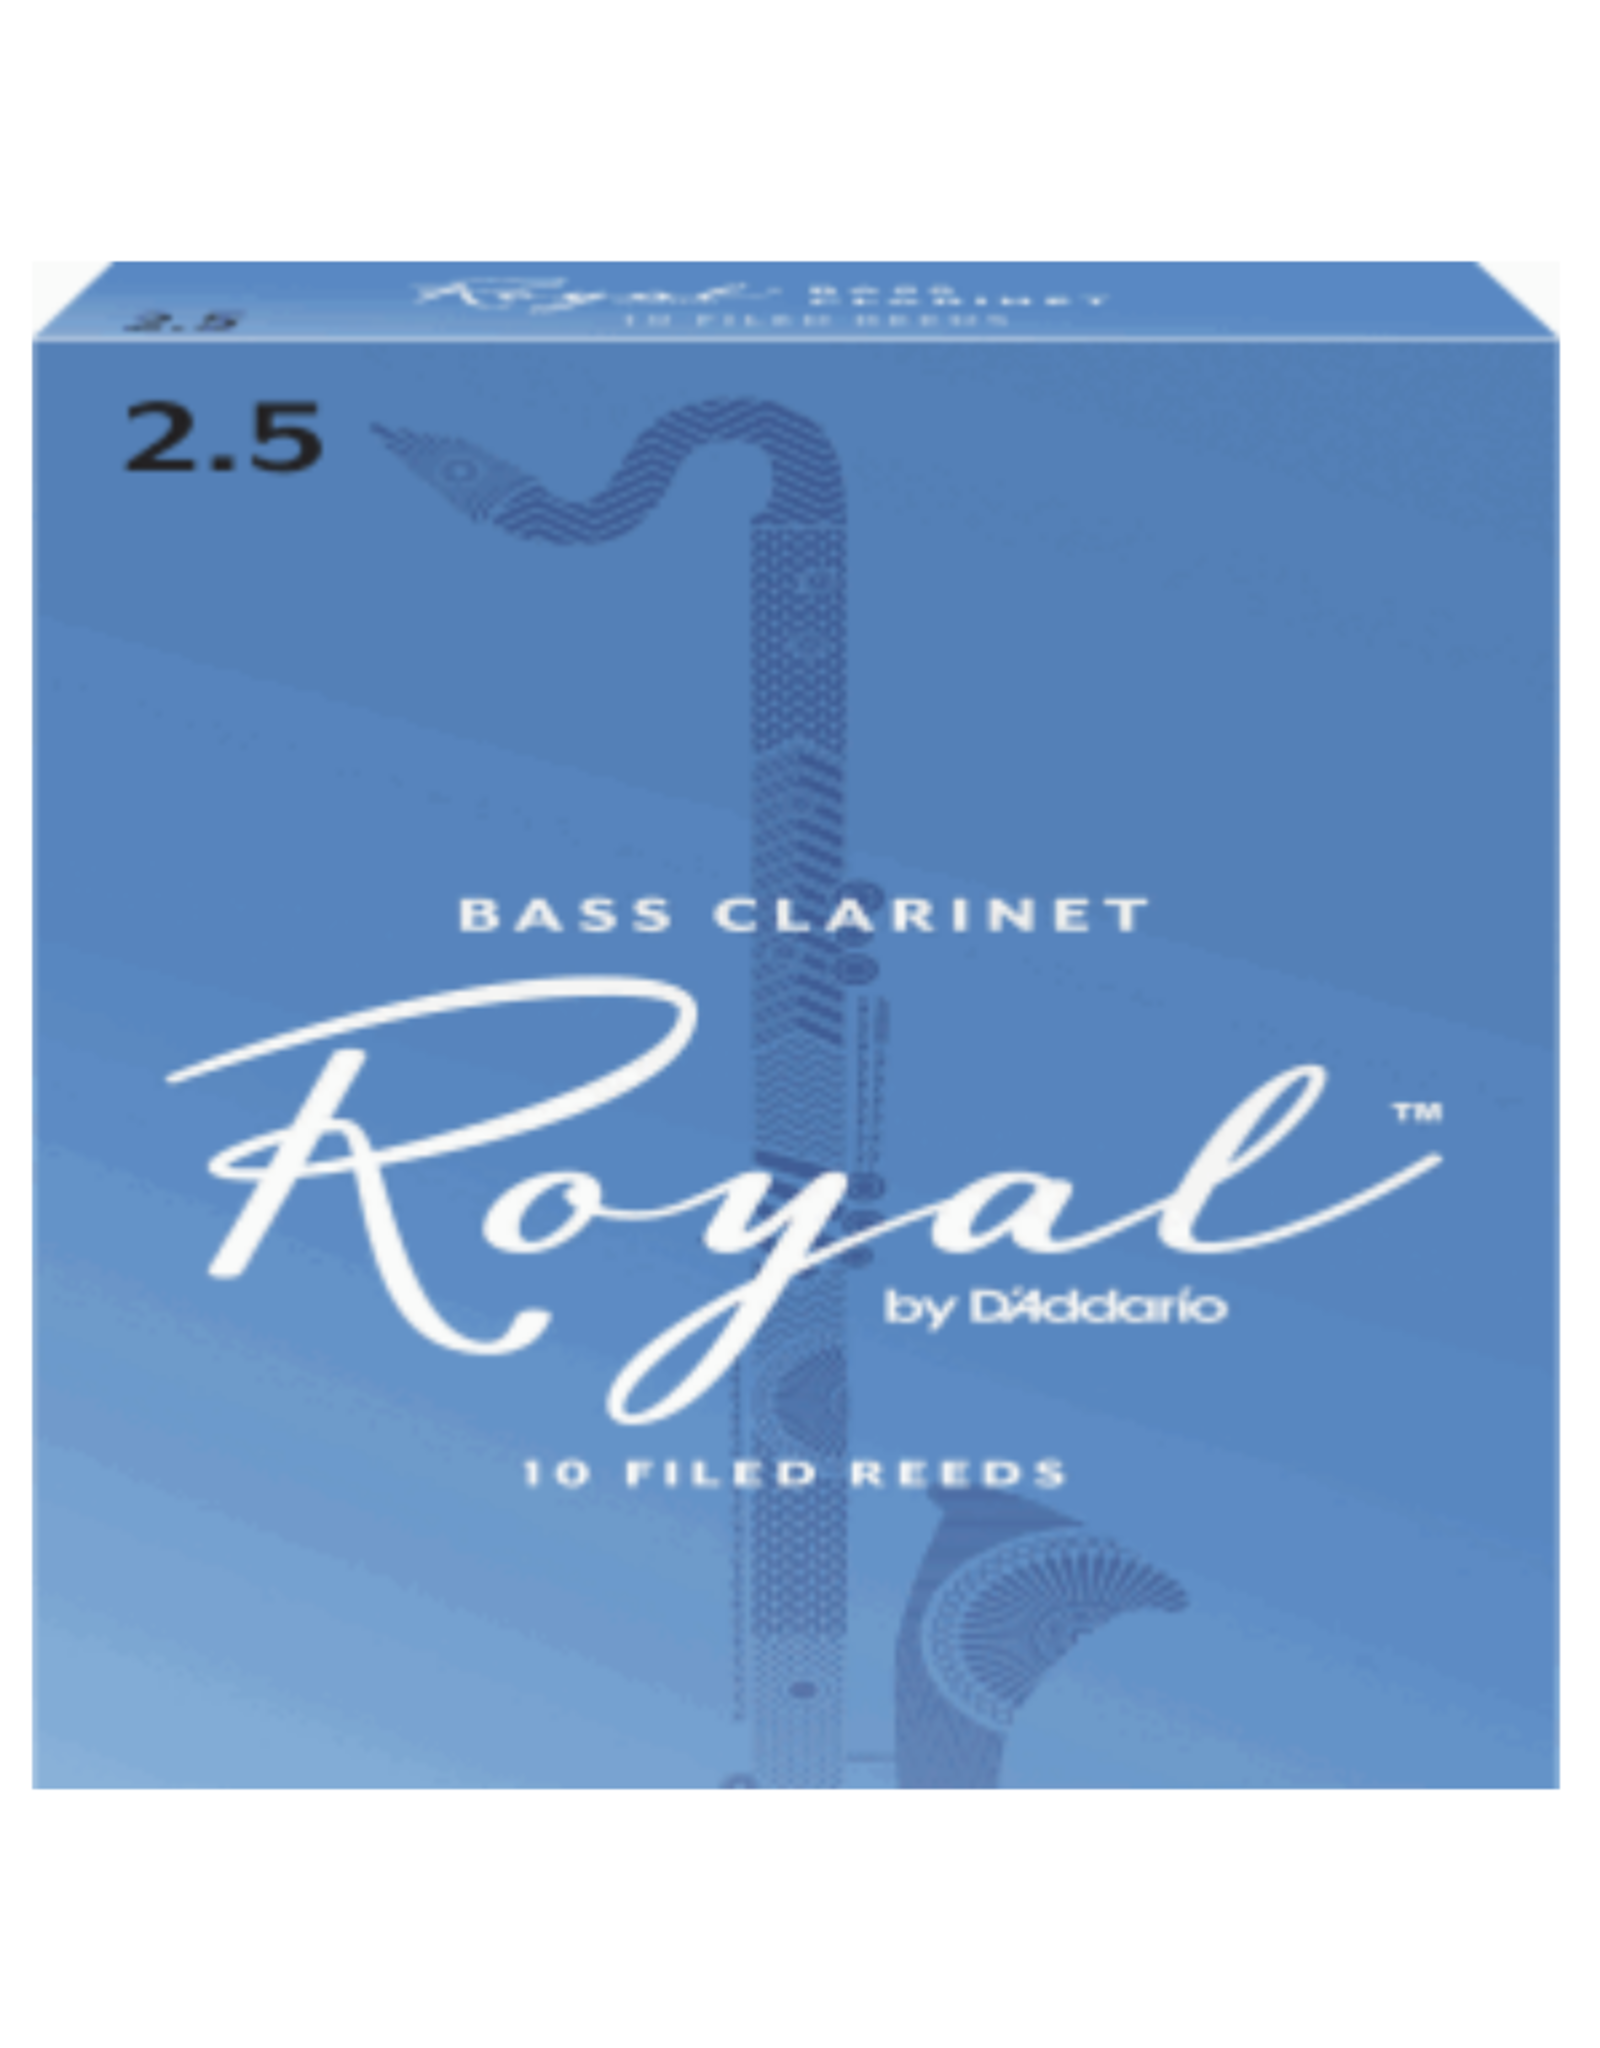 D'Addario Rico Royal by D'Addario Bass Clarinet Reeds 10-Pack